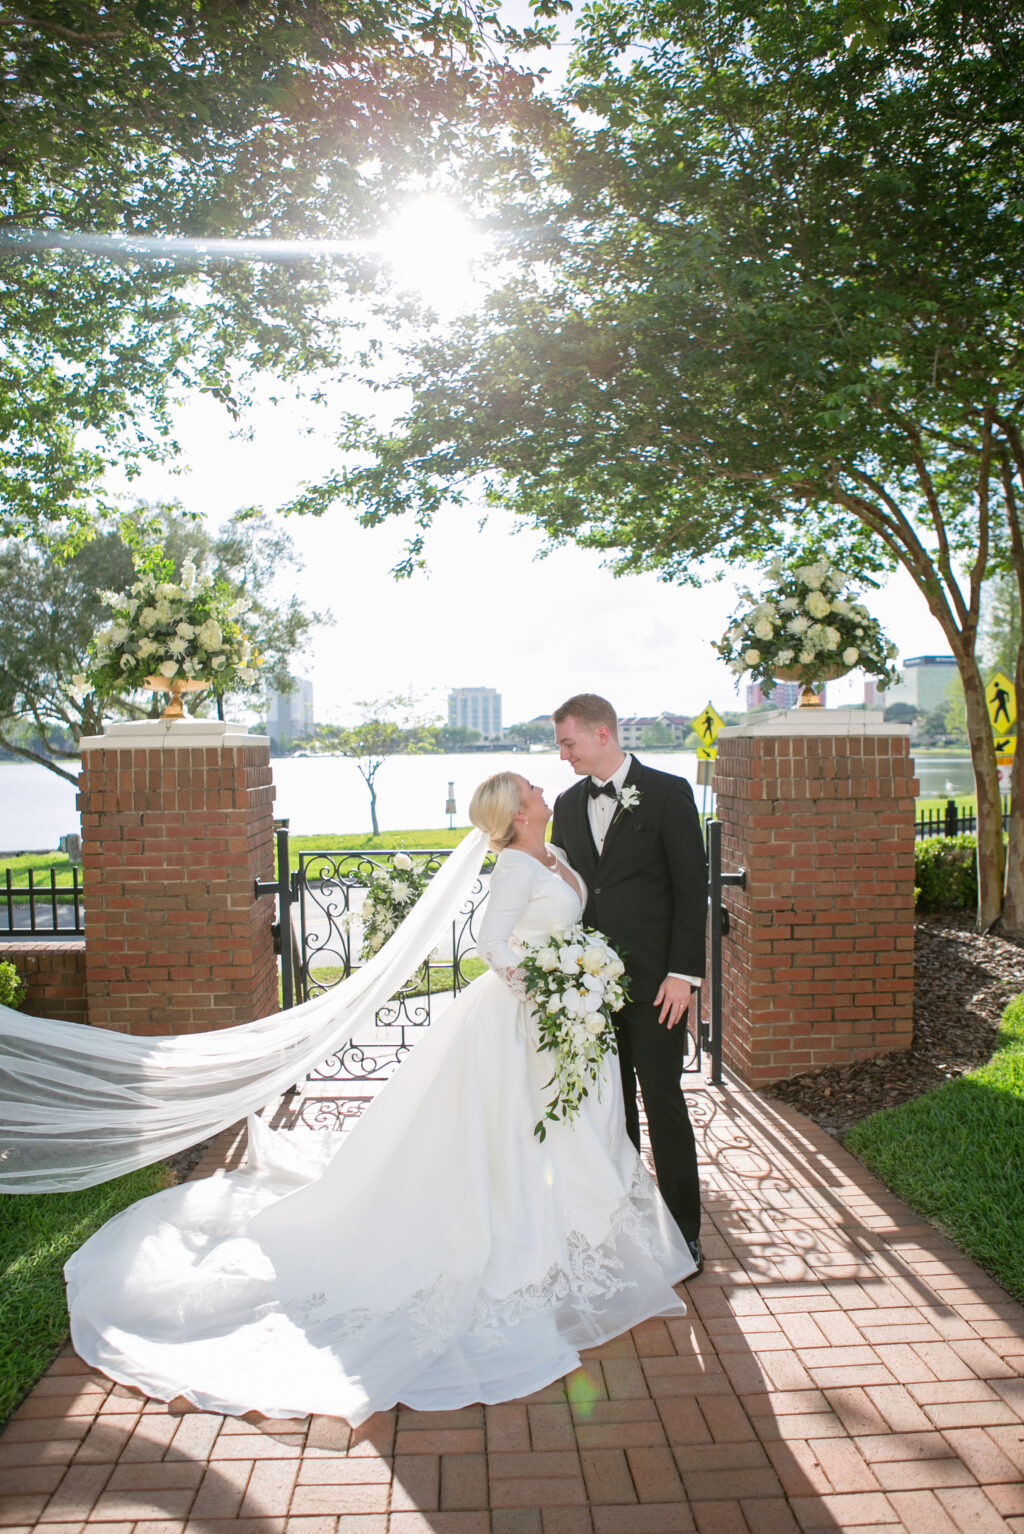 Romantic Bride and Groom Wedding Portrait | Lakeland Photographer Carrie Wildes Photography